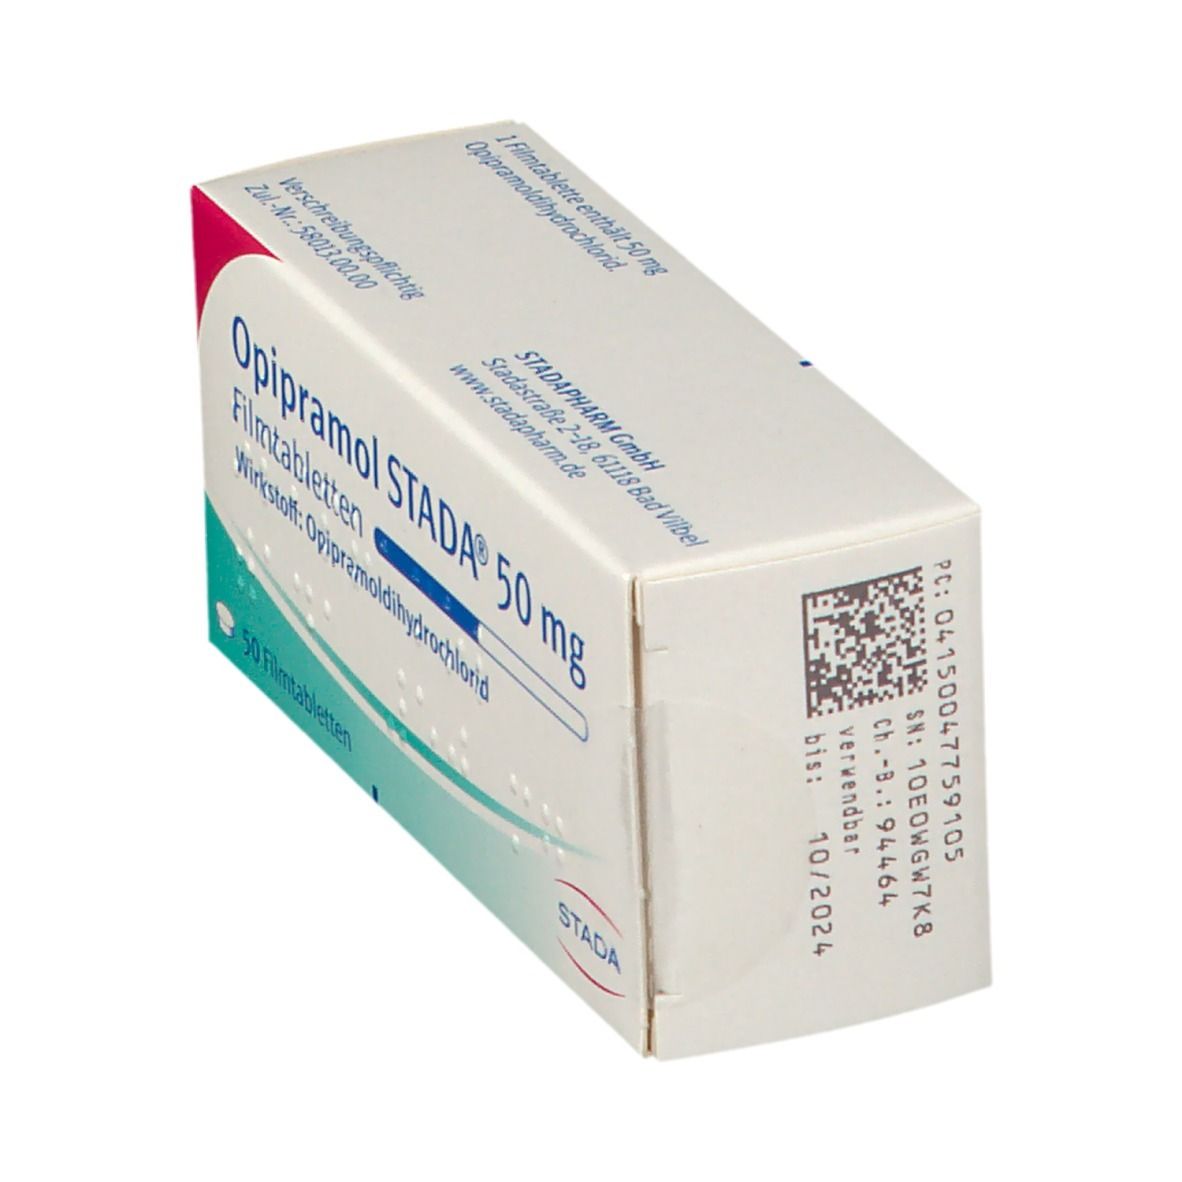 Opipramol STADA® 50 mg